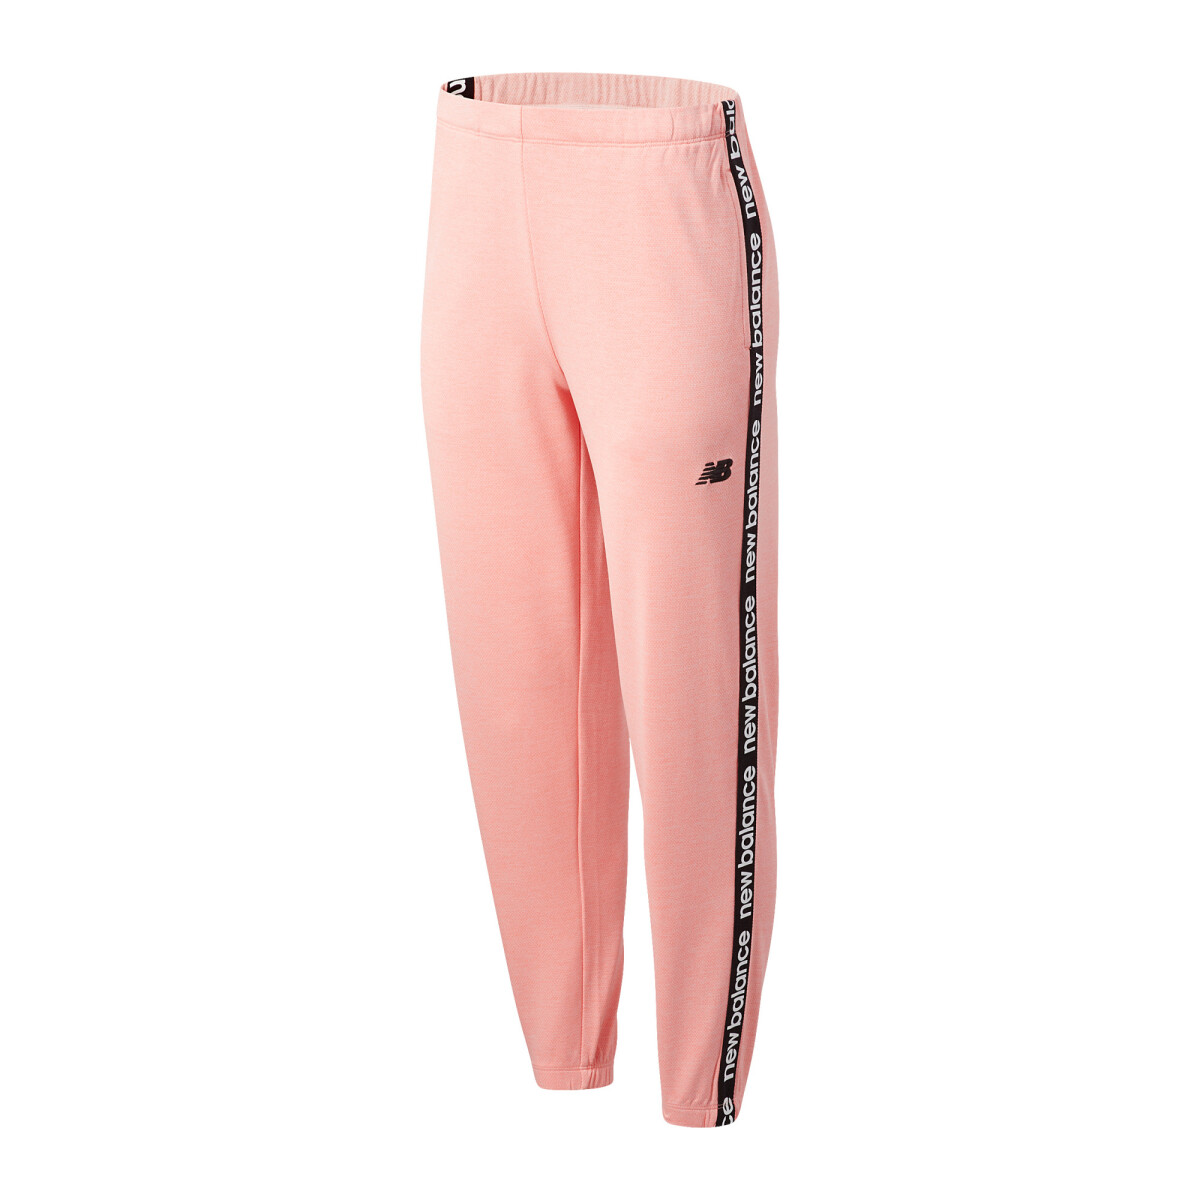 Pantalon New Balance Moda Dama Relentless Jogger - S/C 